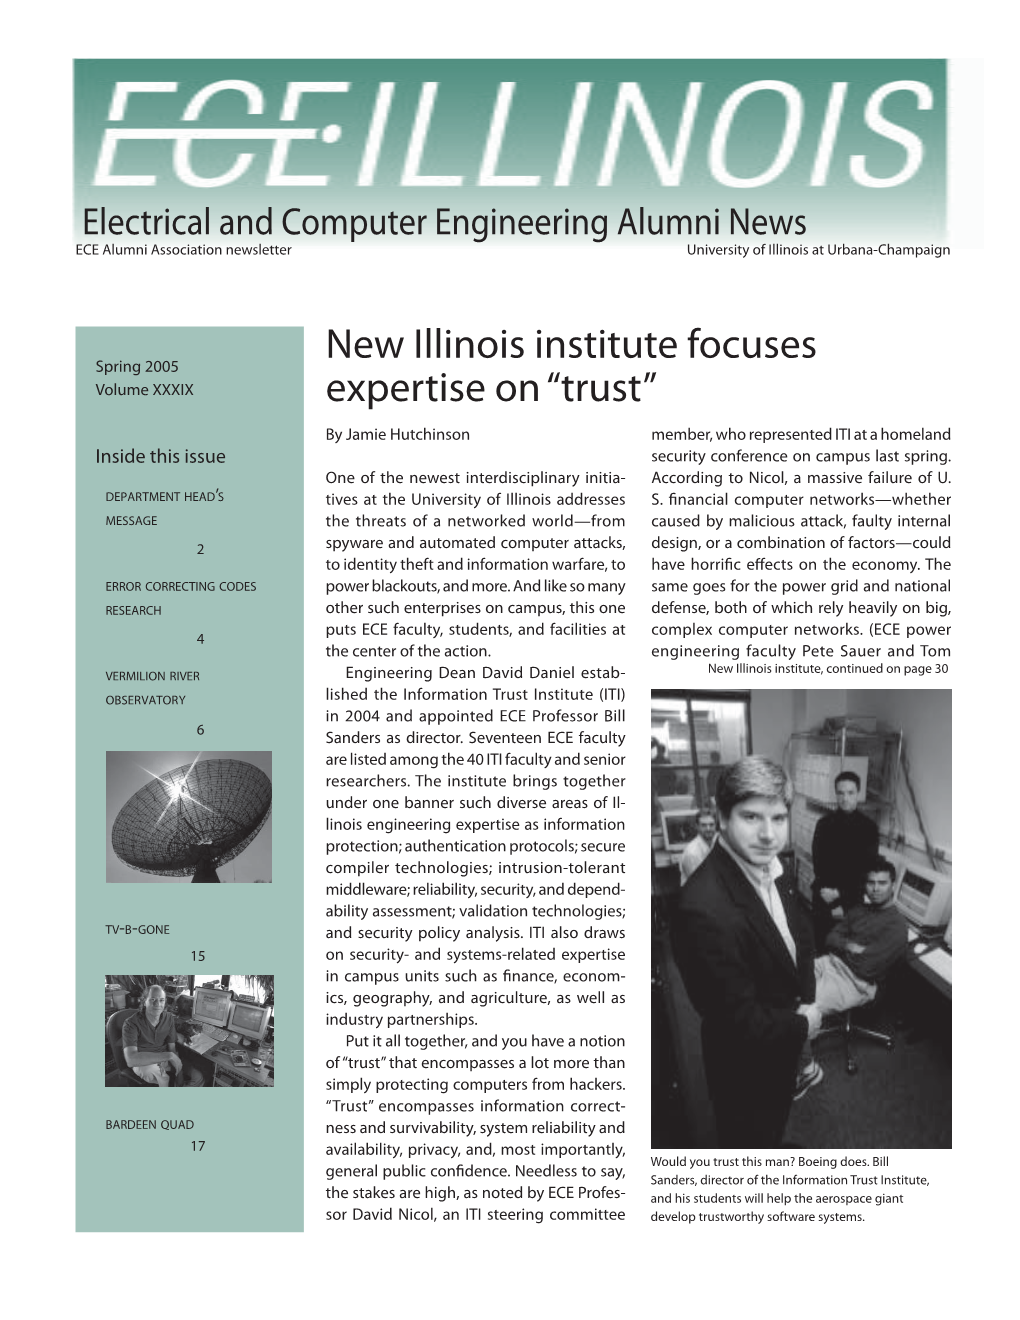 New Illinois Institute Focuses Expertise On